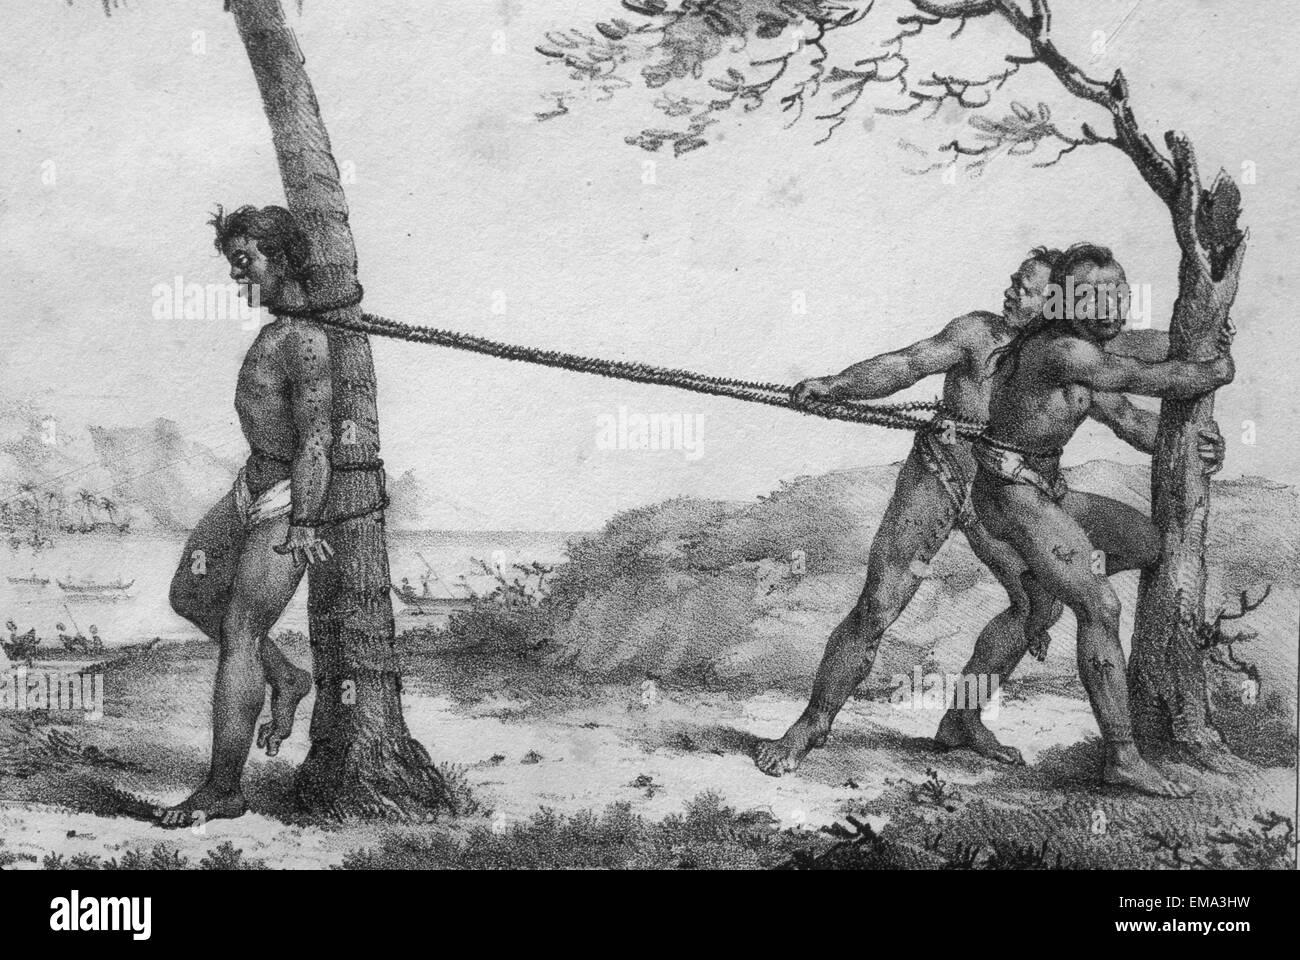 C.1819 Manner Of Punishing Strangulation, Jacques Arago, Man Strapped To Tree, Being Strangled Stock Photo